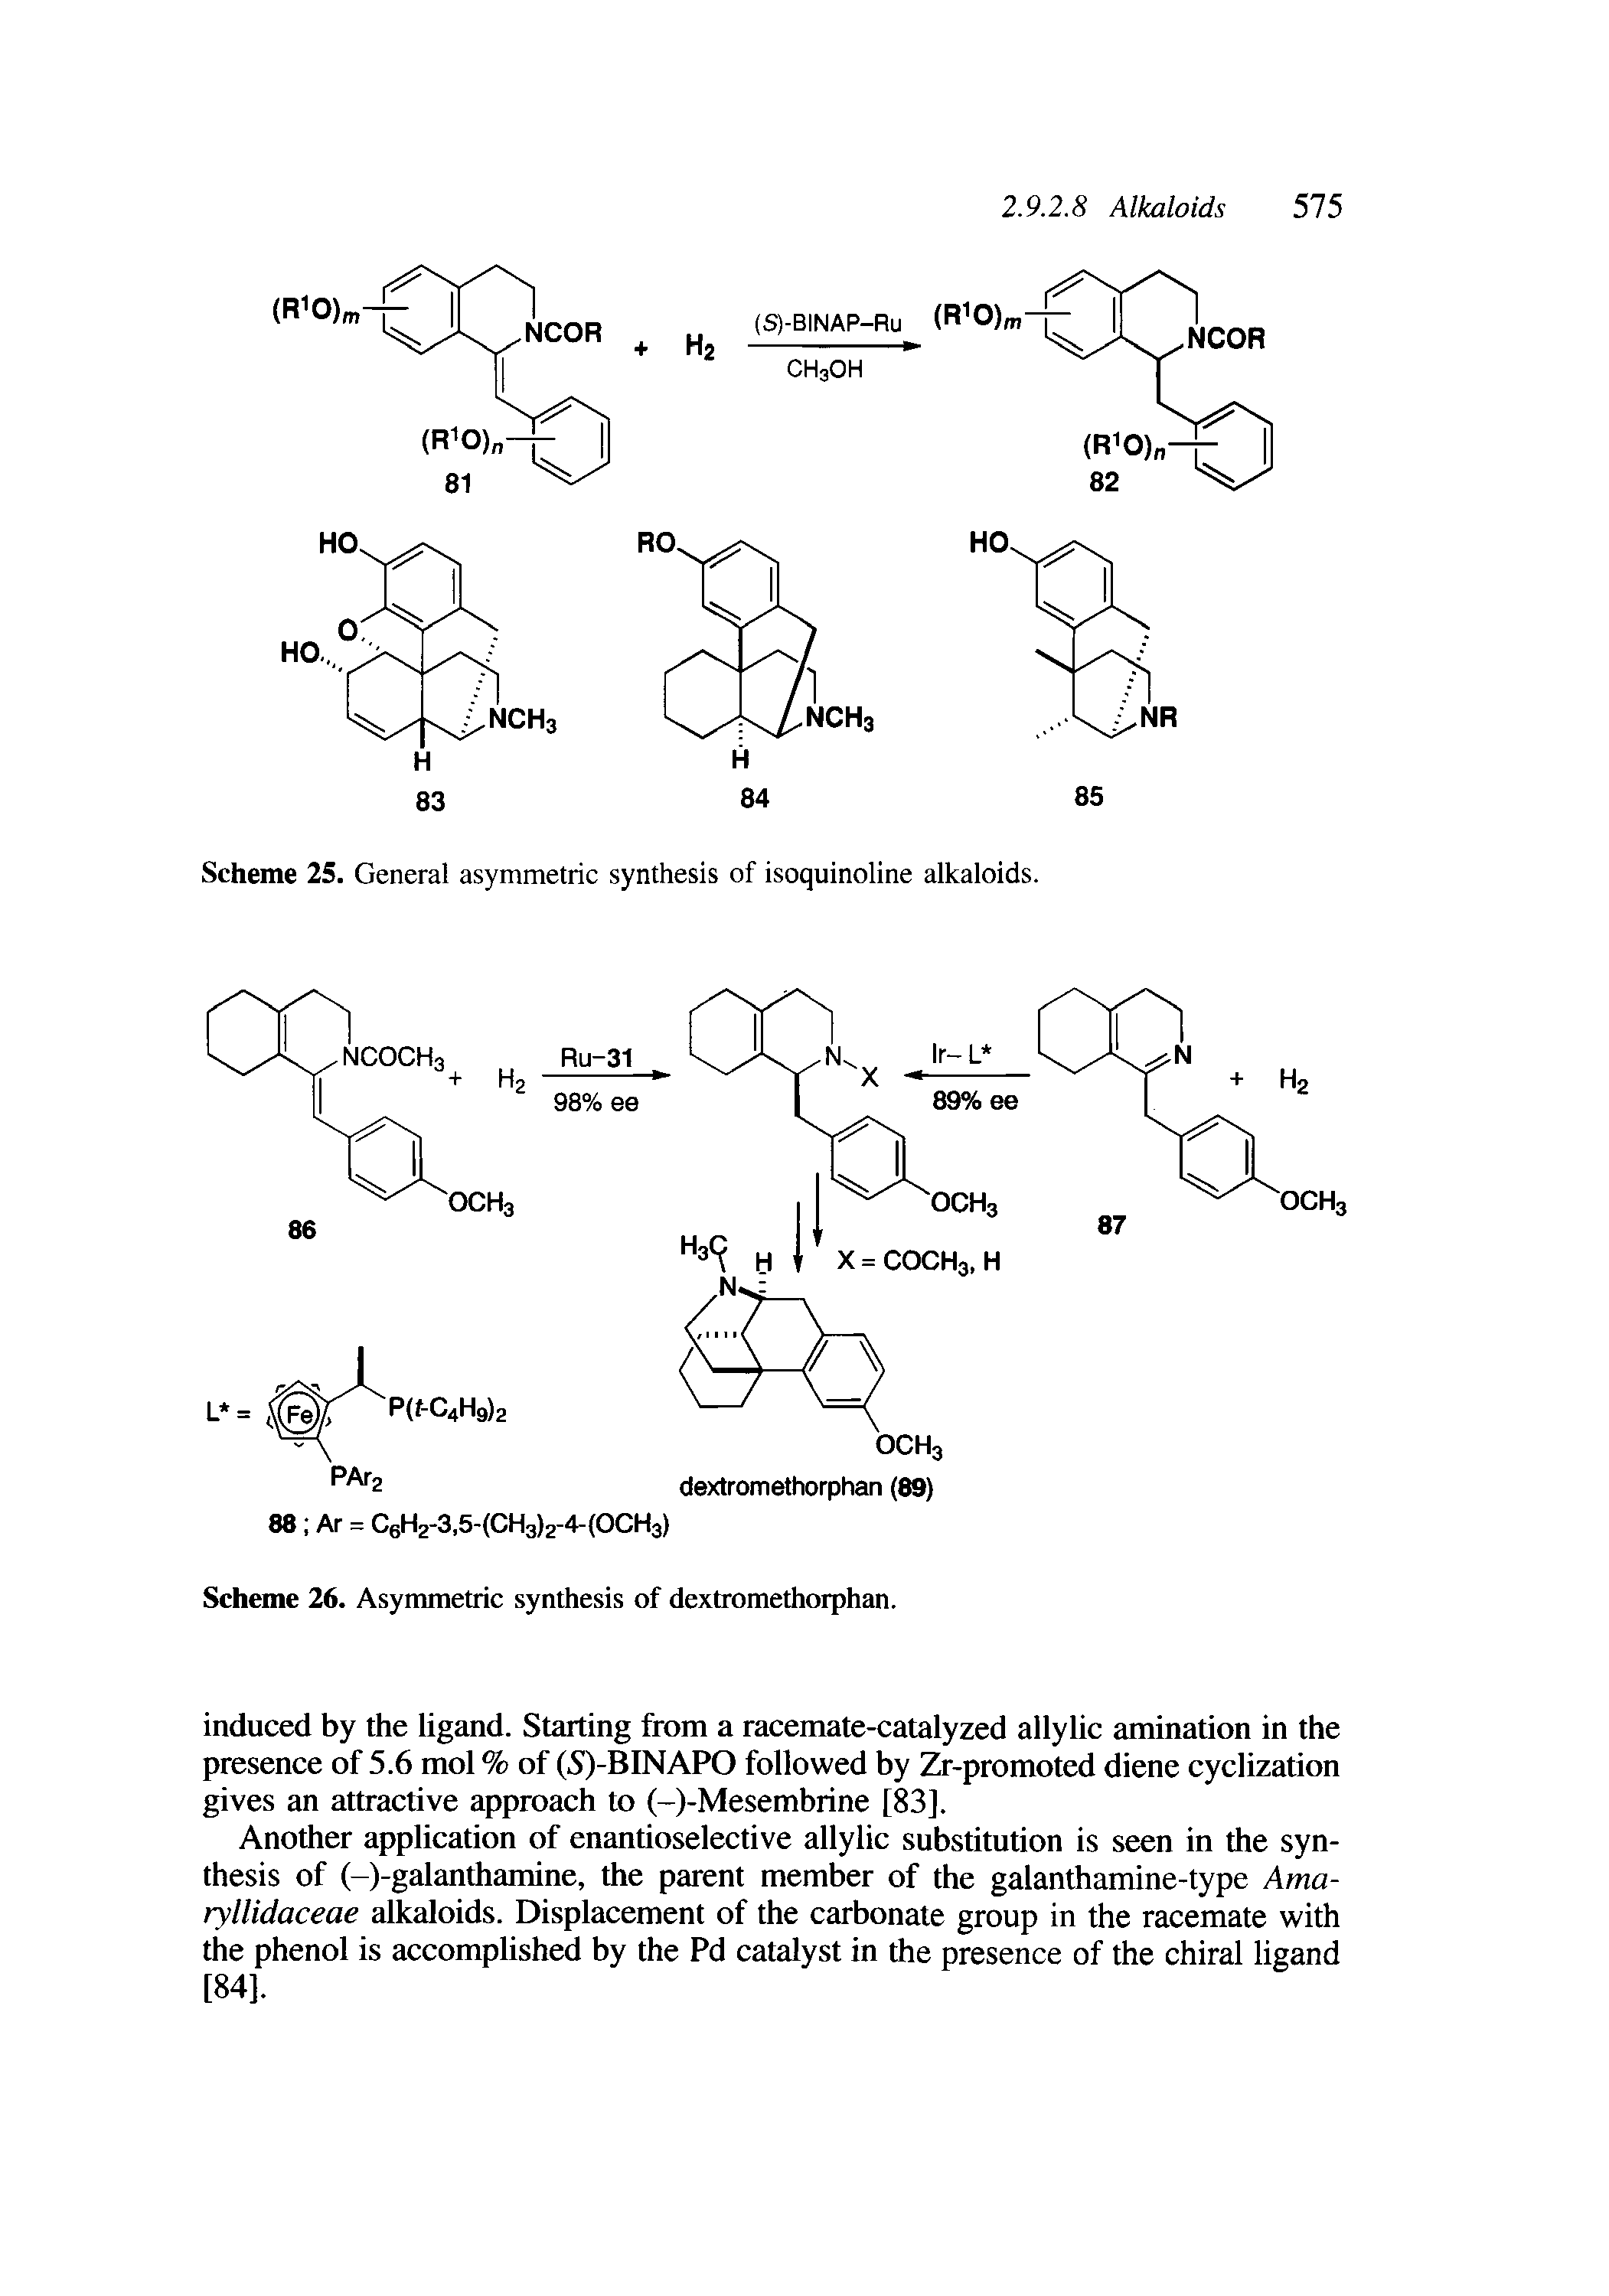 Scheme 25. General asymmetric synthesis of isoquinoline alkaloids.